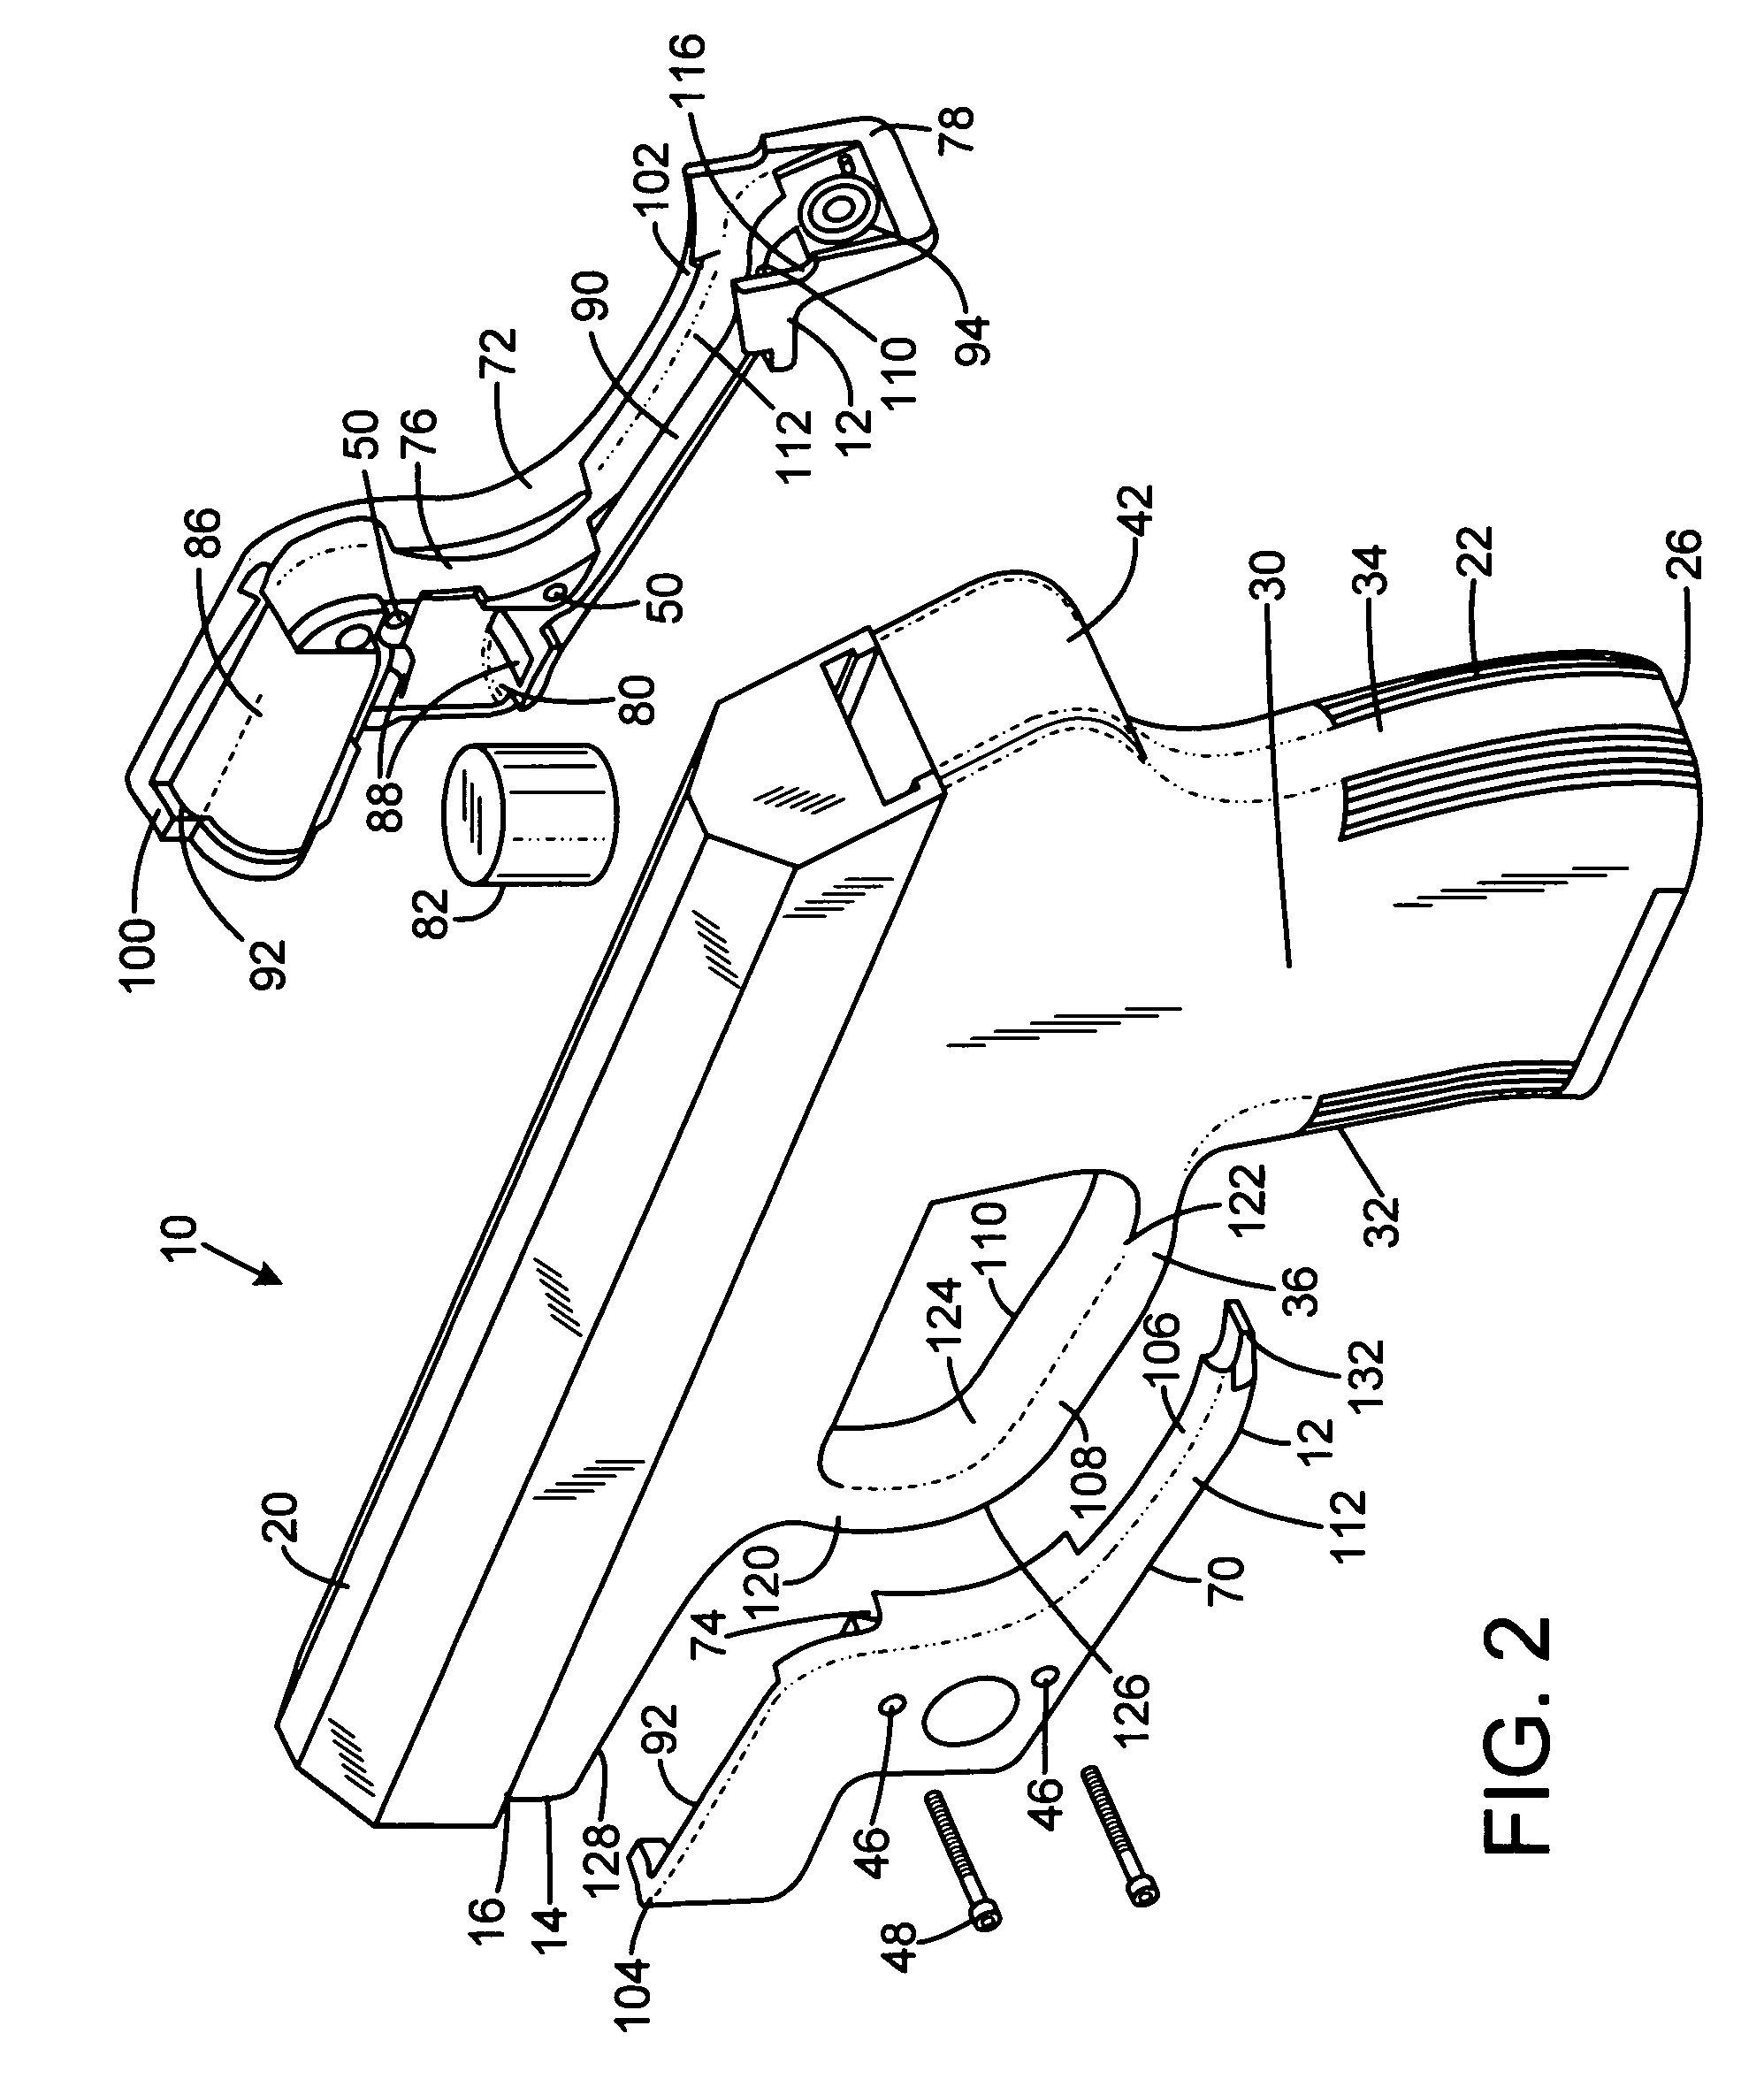 Laser gunsight system for a firearm trigger guard